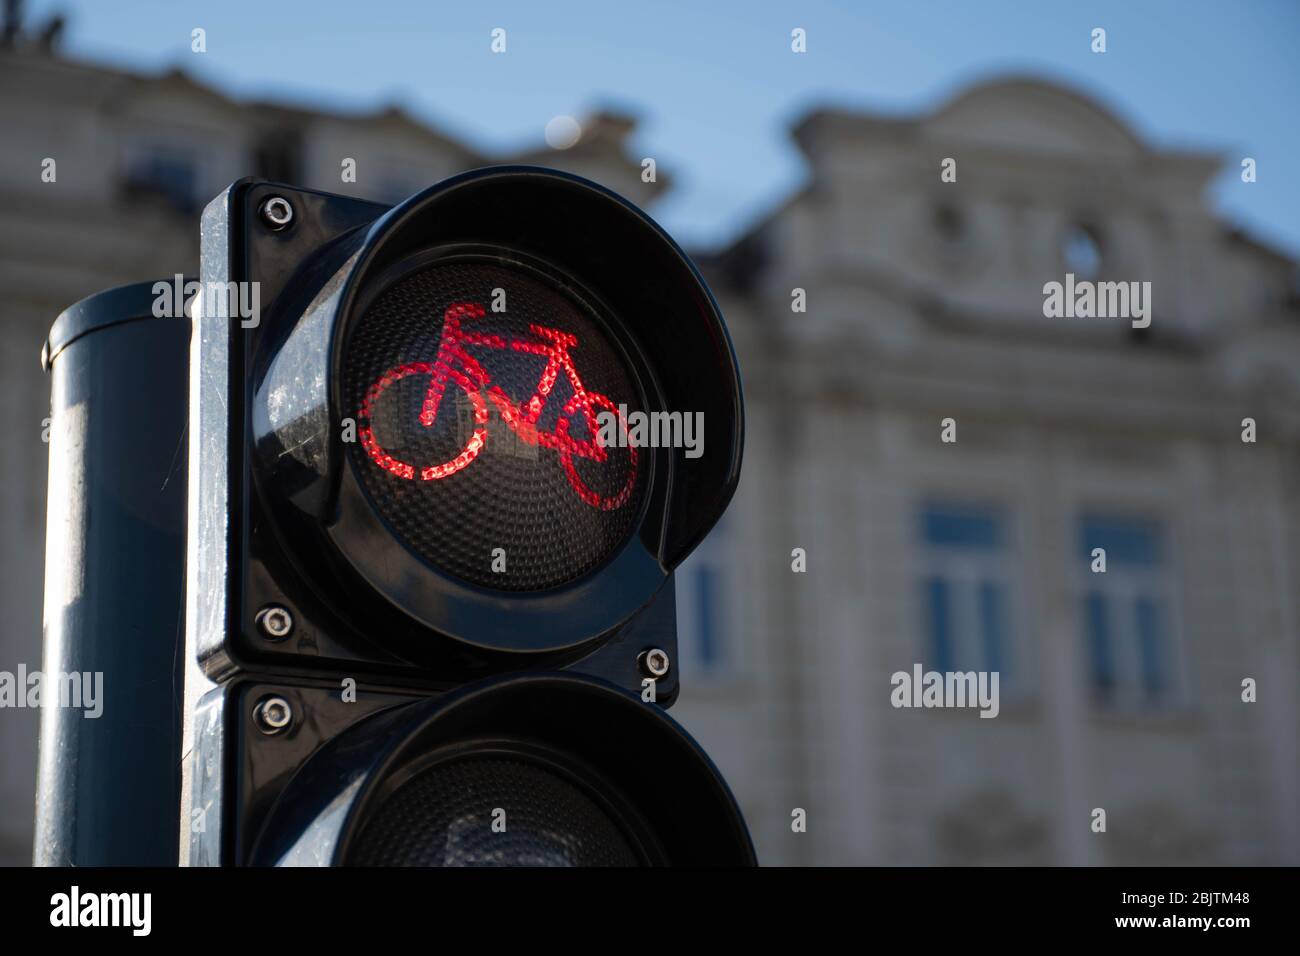 Sustainable transport. Bicycle traffic signal, red light, road bike, free bike zone or area, bike sharing Stock Photo